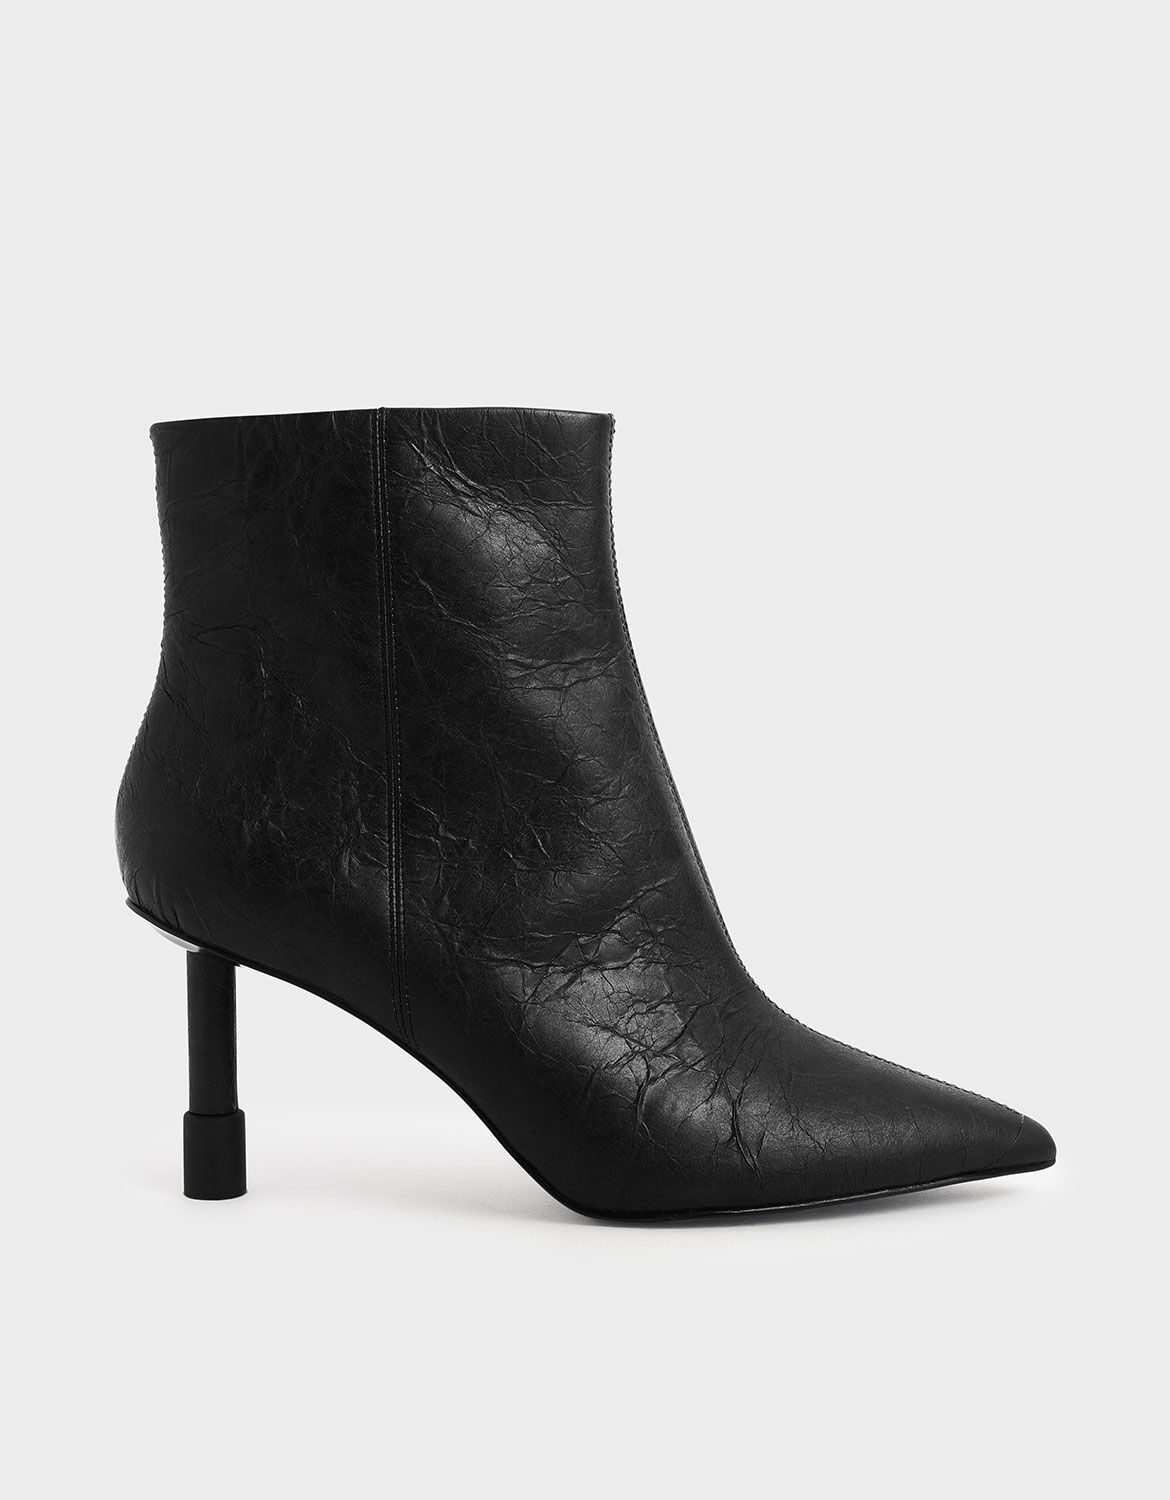 black stiletto ankle boots uk